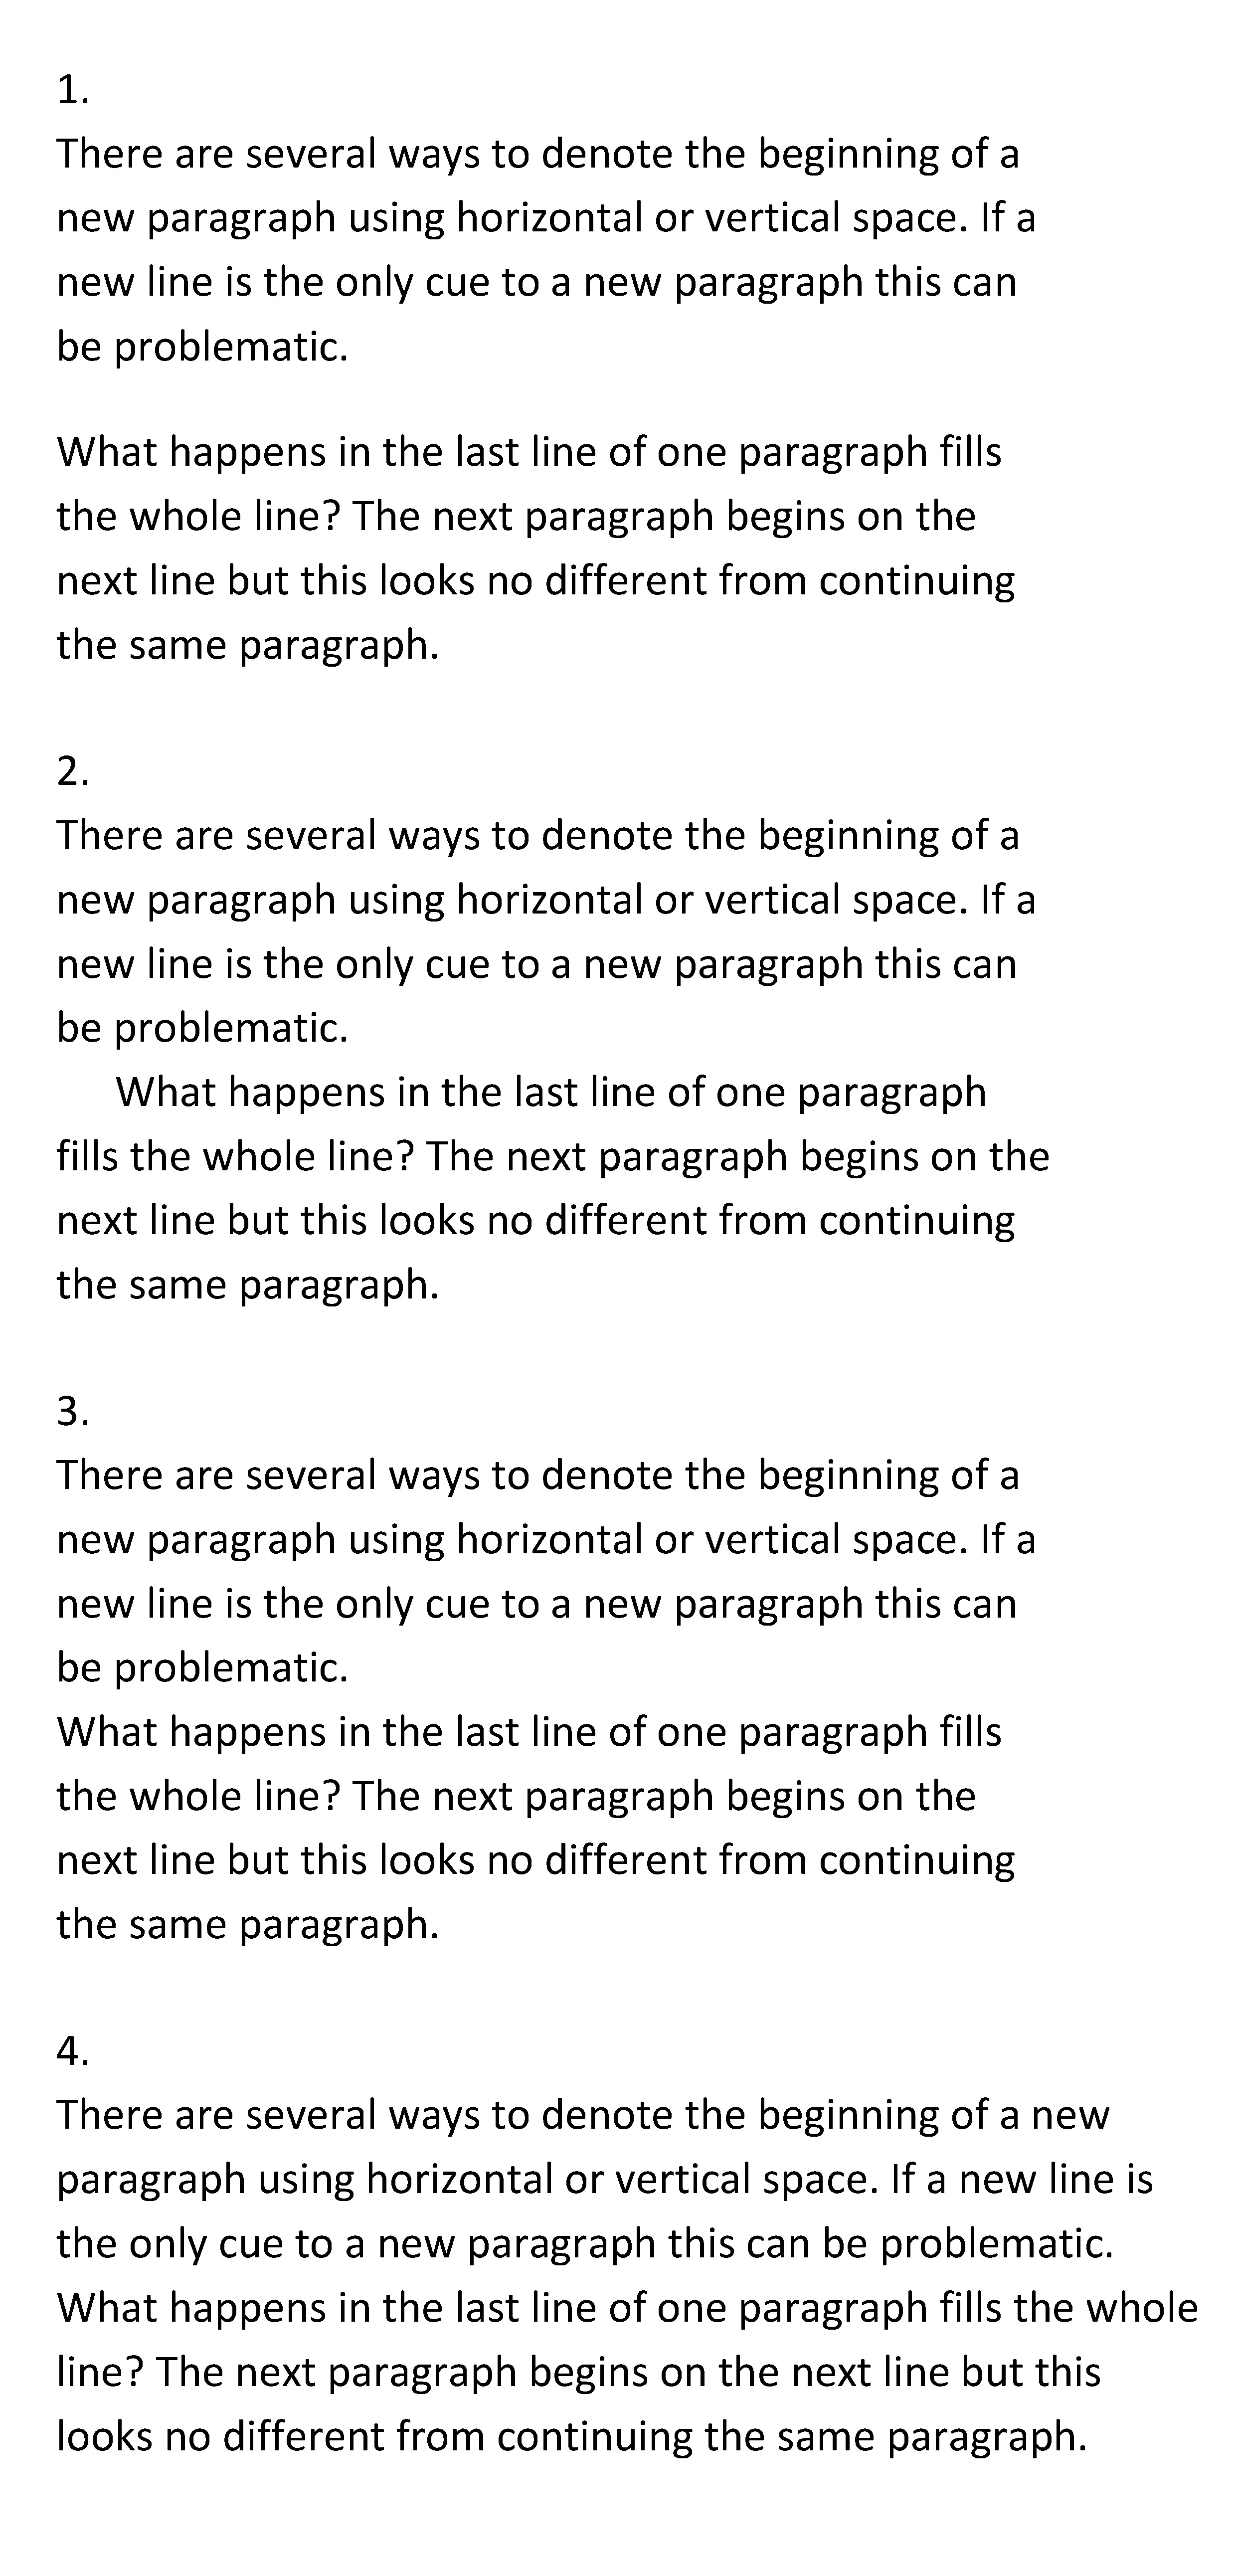 Methods of denoting paragraphs